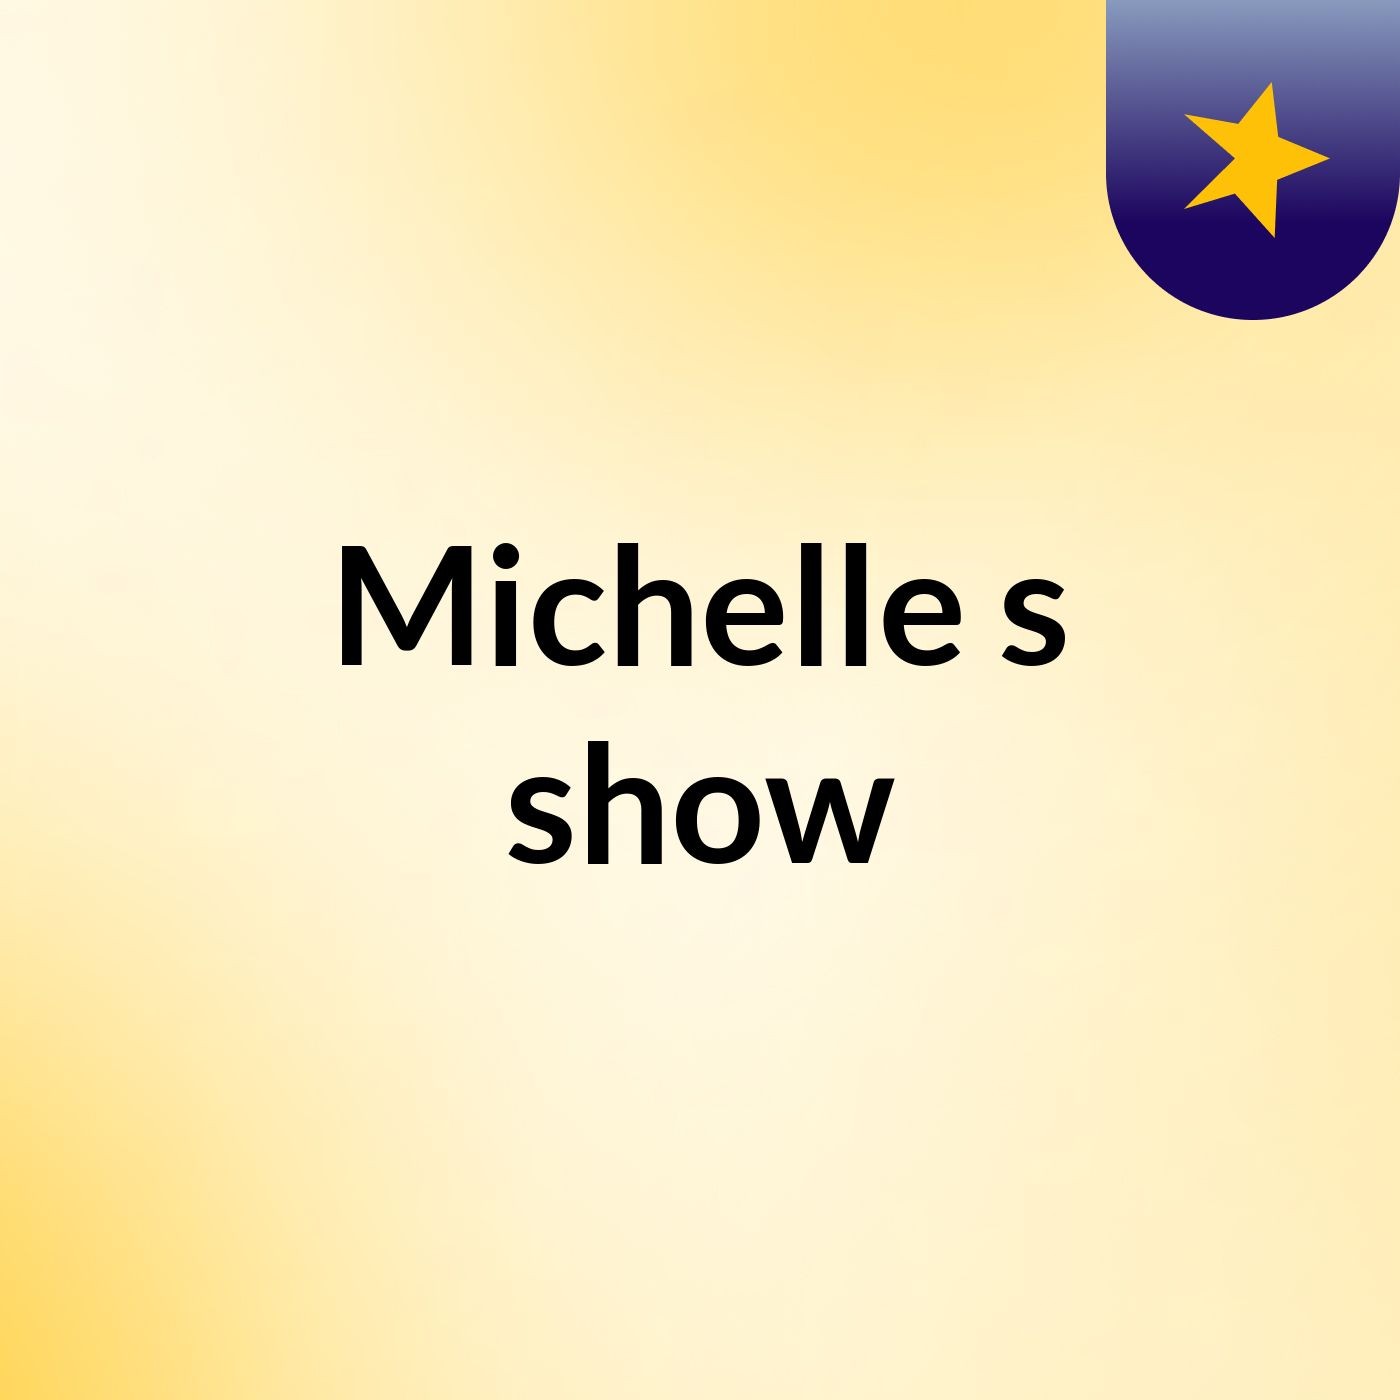 Michelle's show